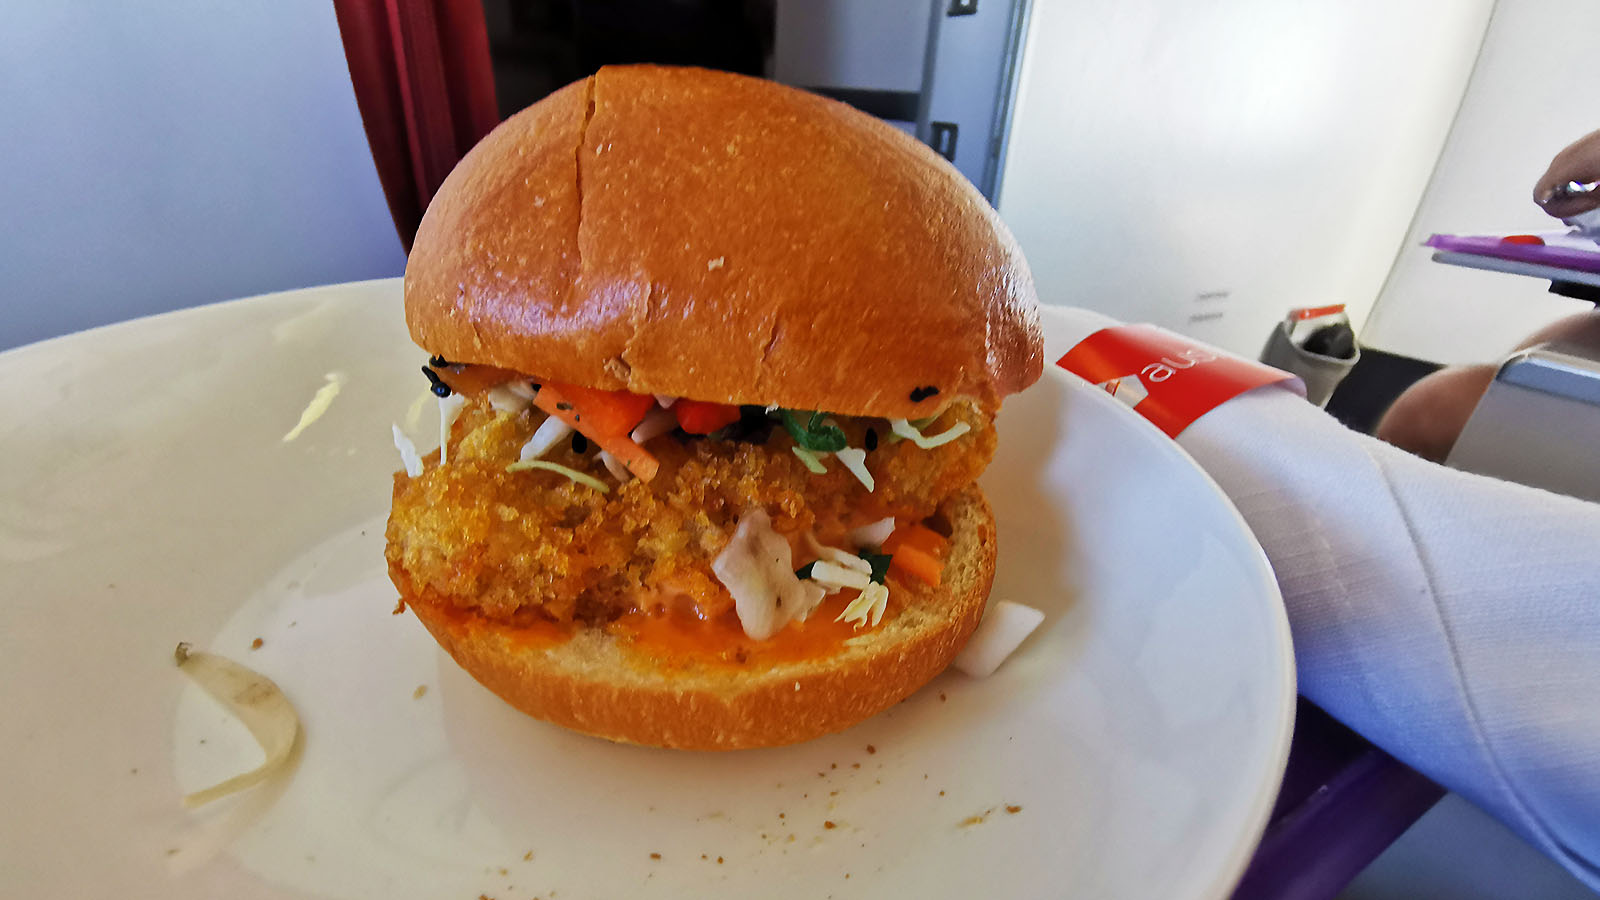 Chicken burger for lunch in Virgin Australia's Boeing 737 Business Class cabin